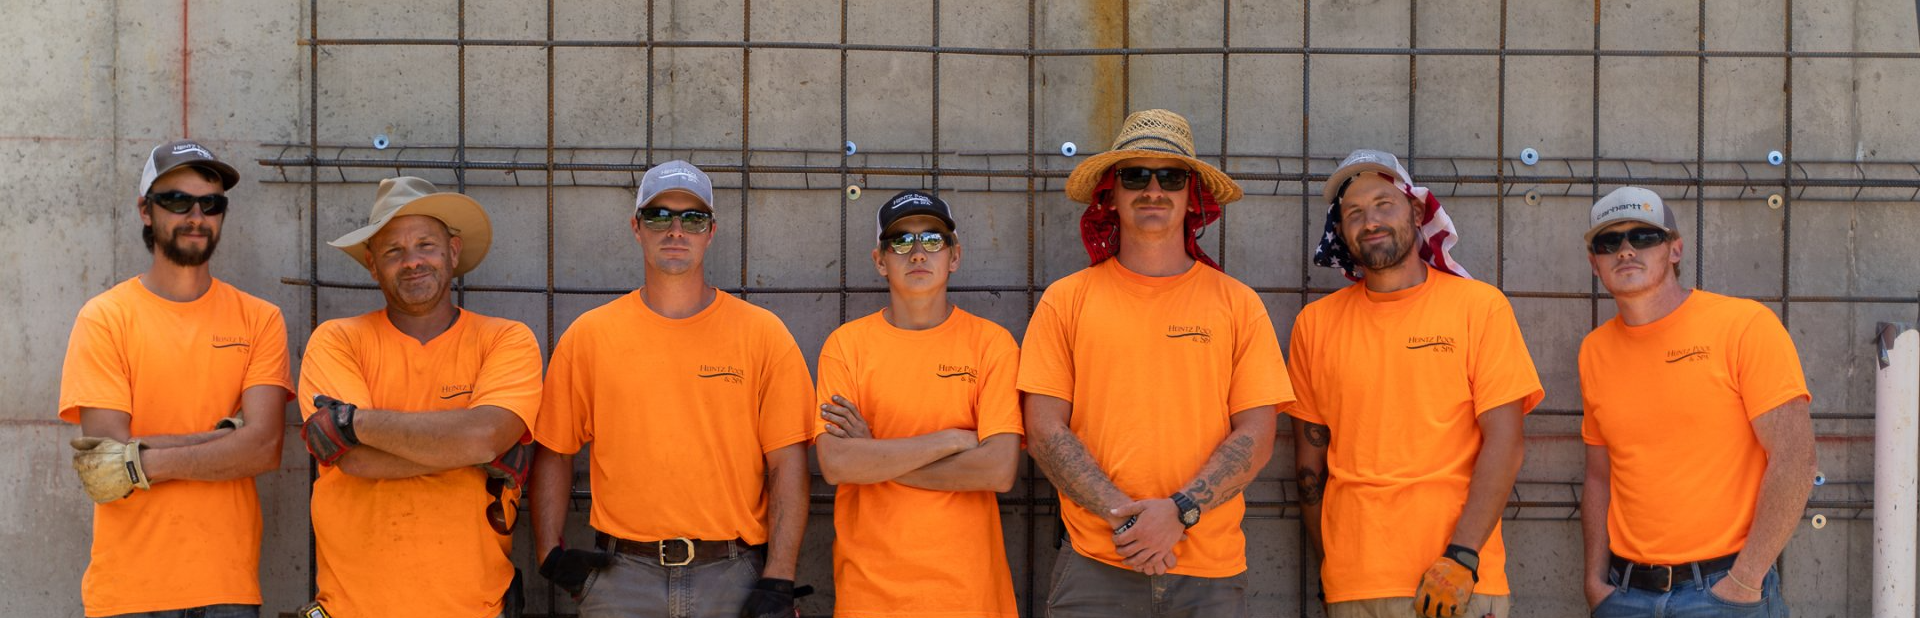 Heintz Pool & Spa Team all standing wearing orange uniform